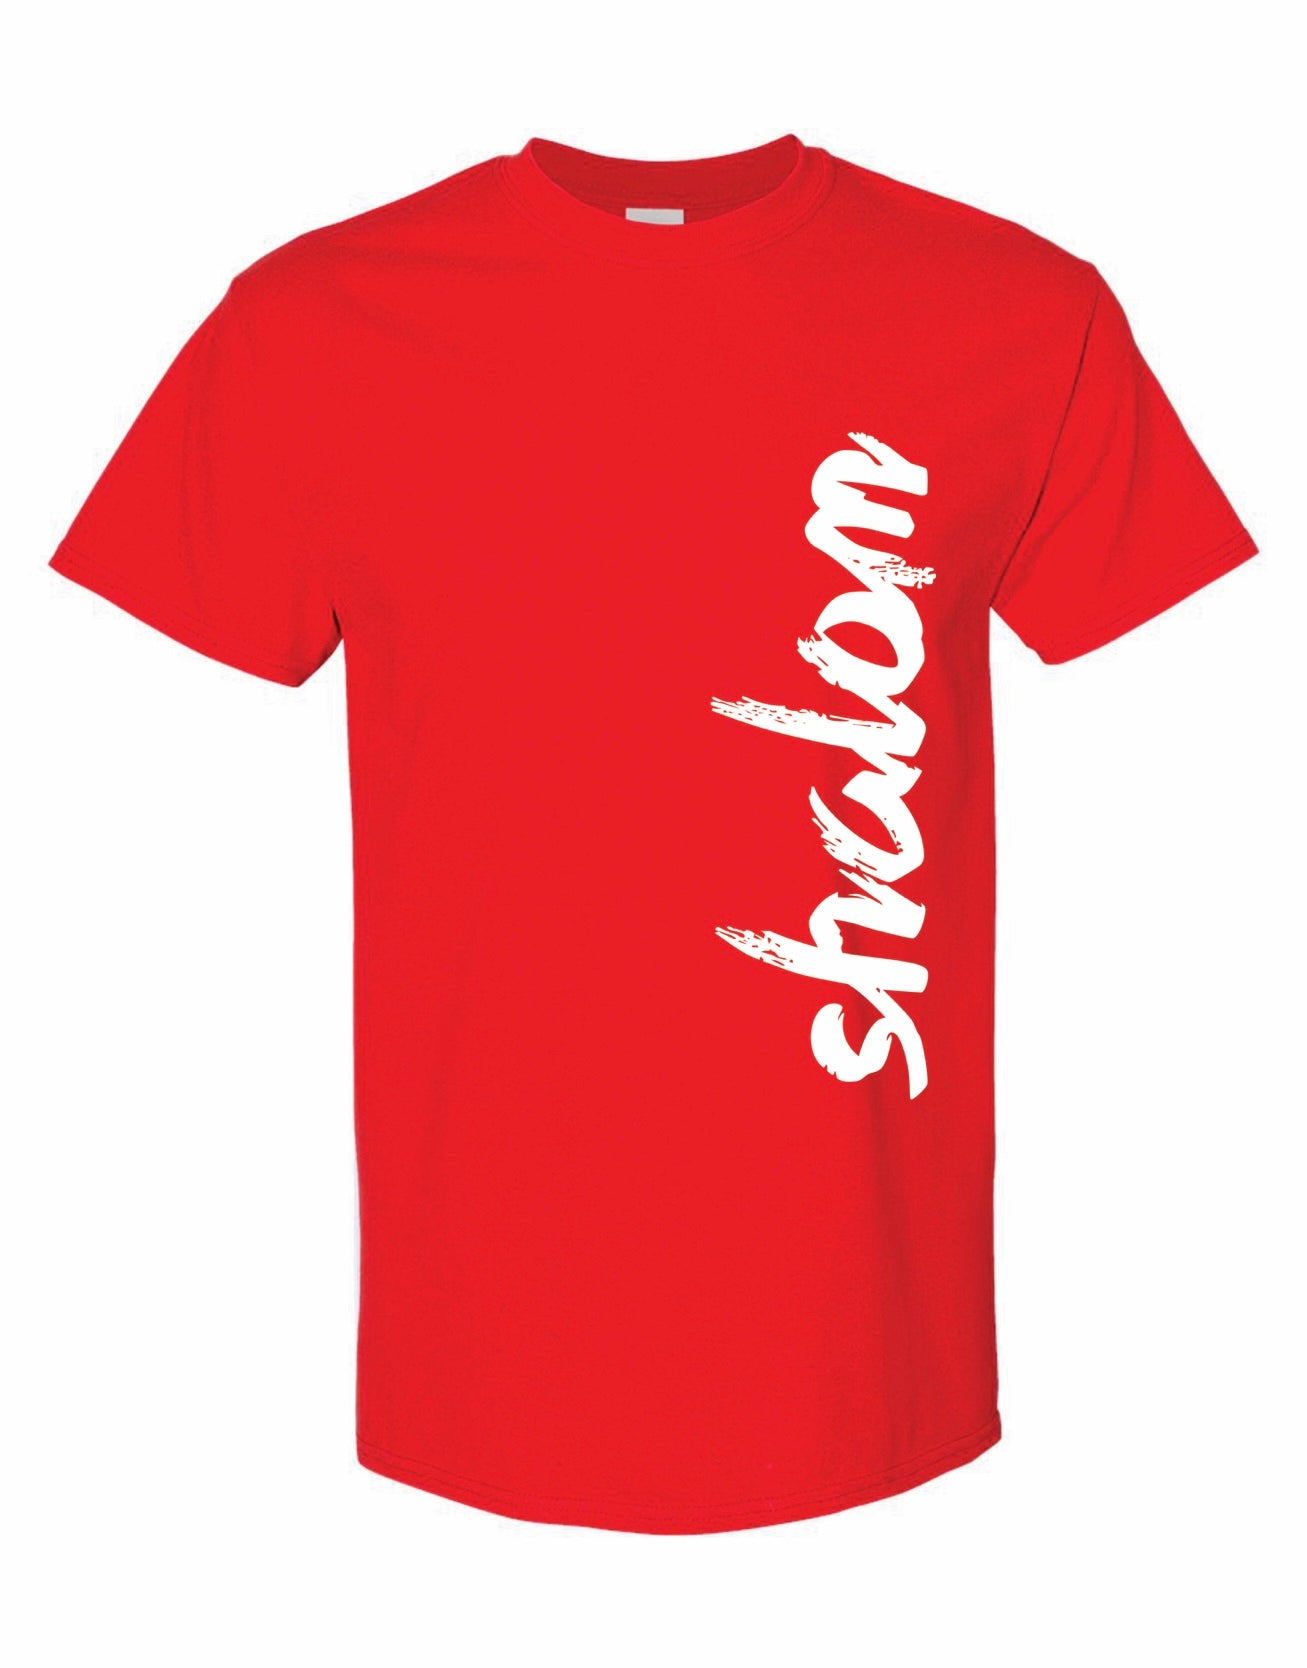 Shalom Shirt (Men & Women)